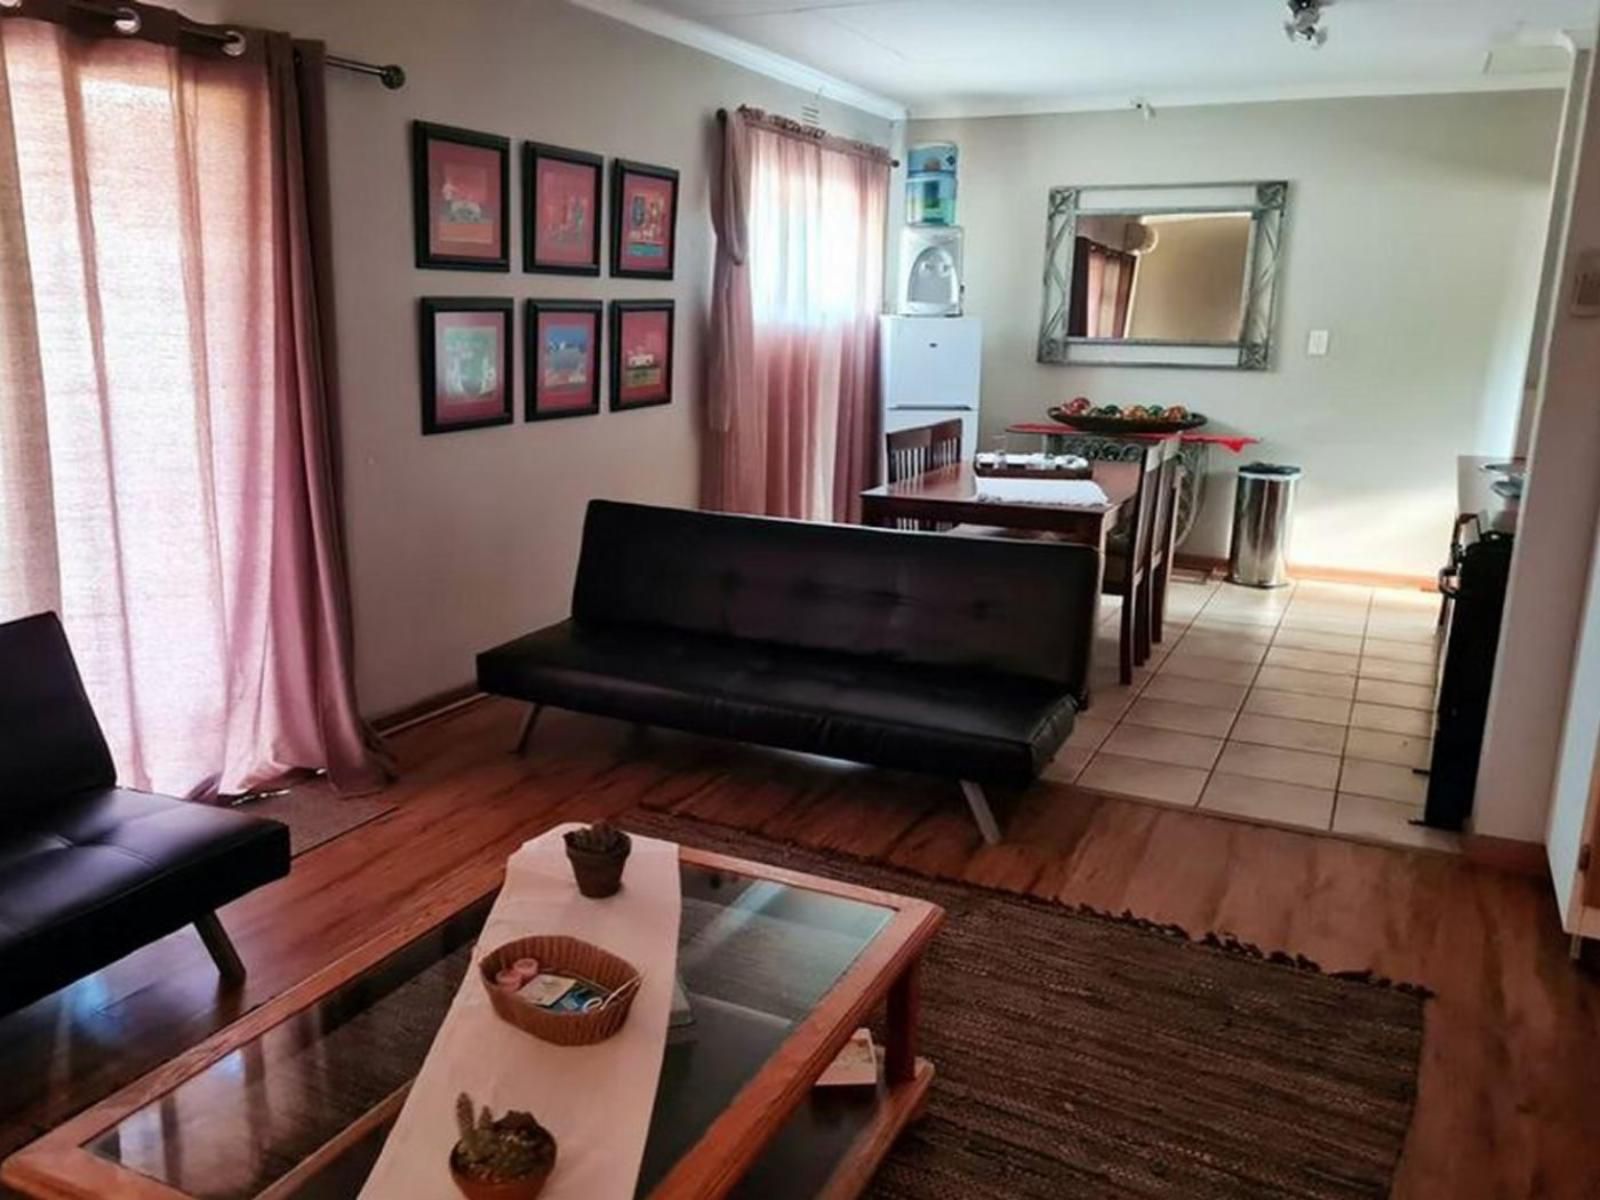 Huis Afrika Vanderbijlpark Se 6 Vanderbijlpark Gauteng South Africa Living Room